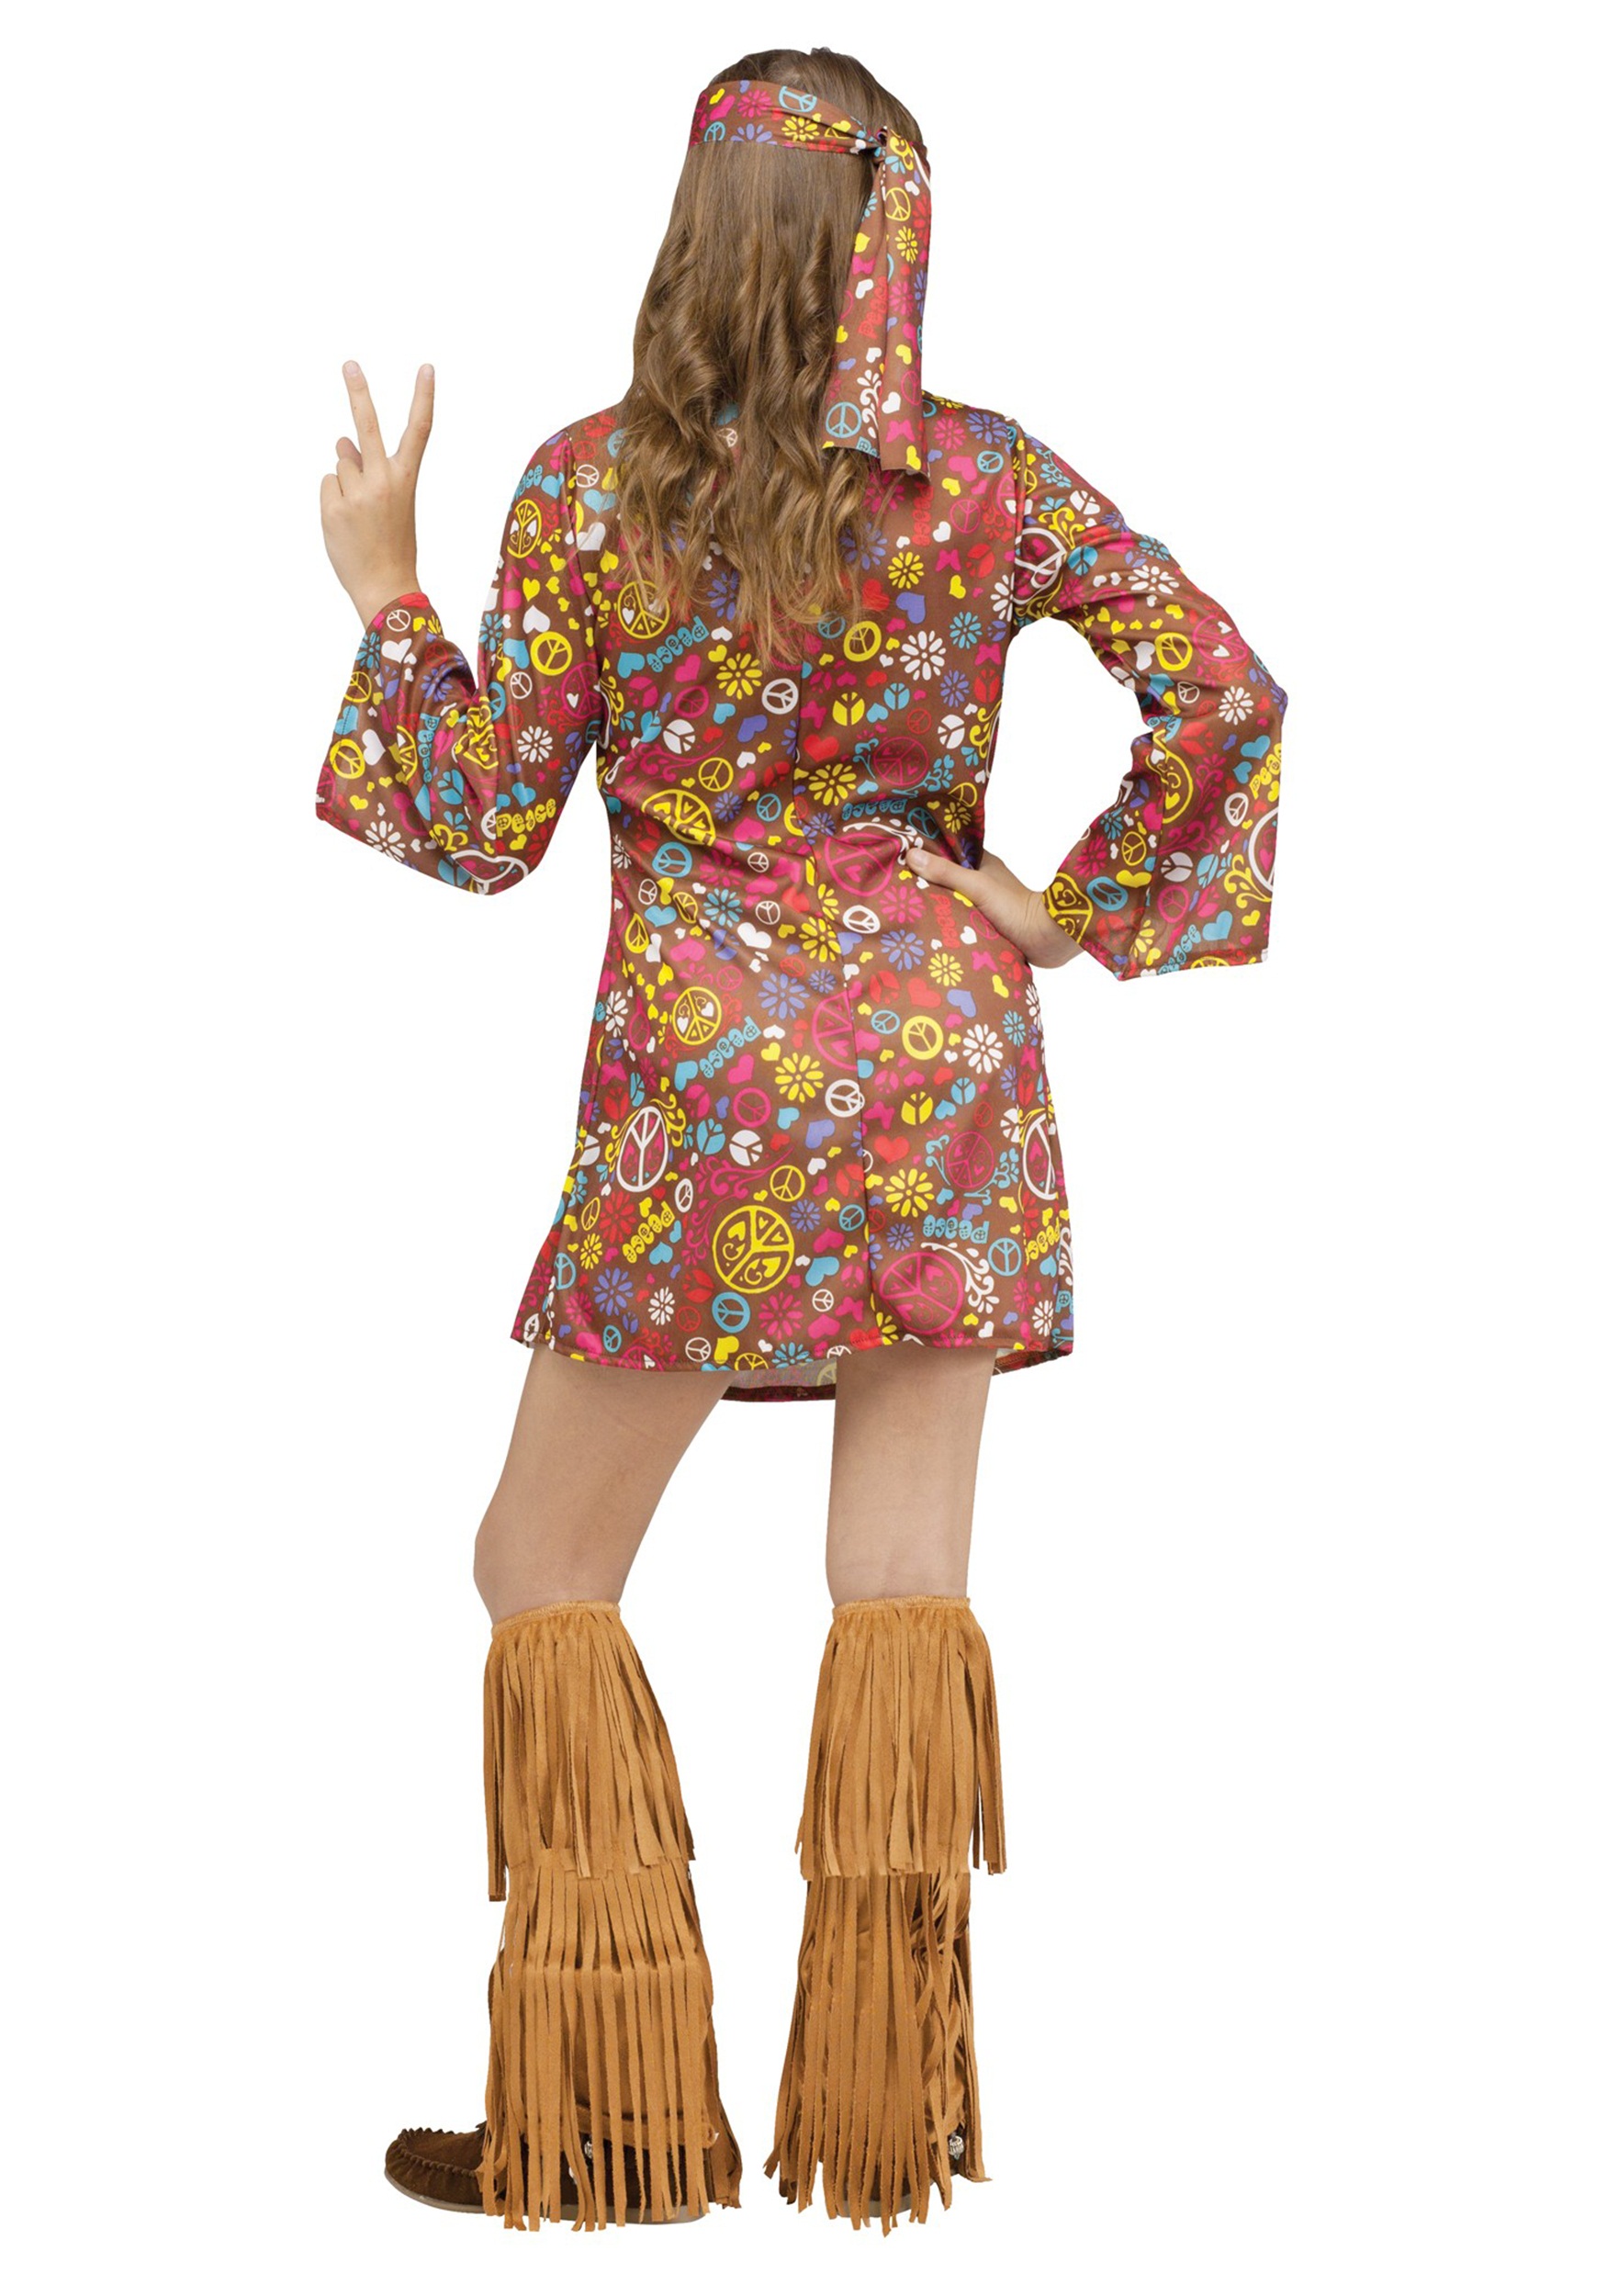 Peace & Love Hippie Kids Costume